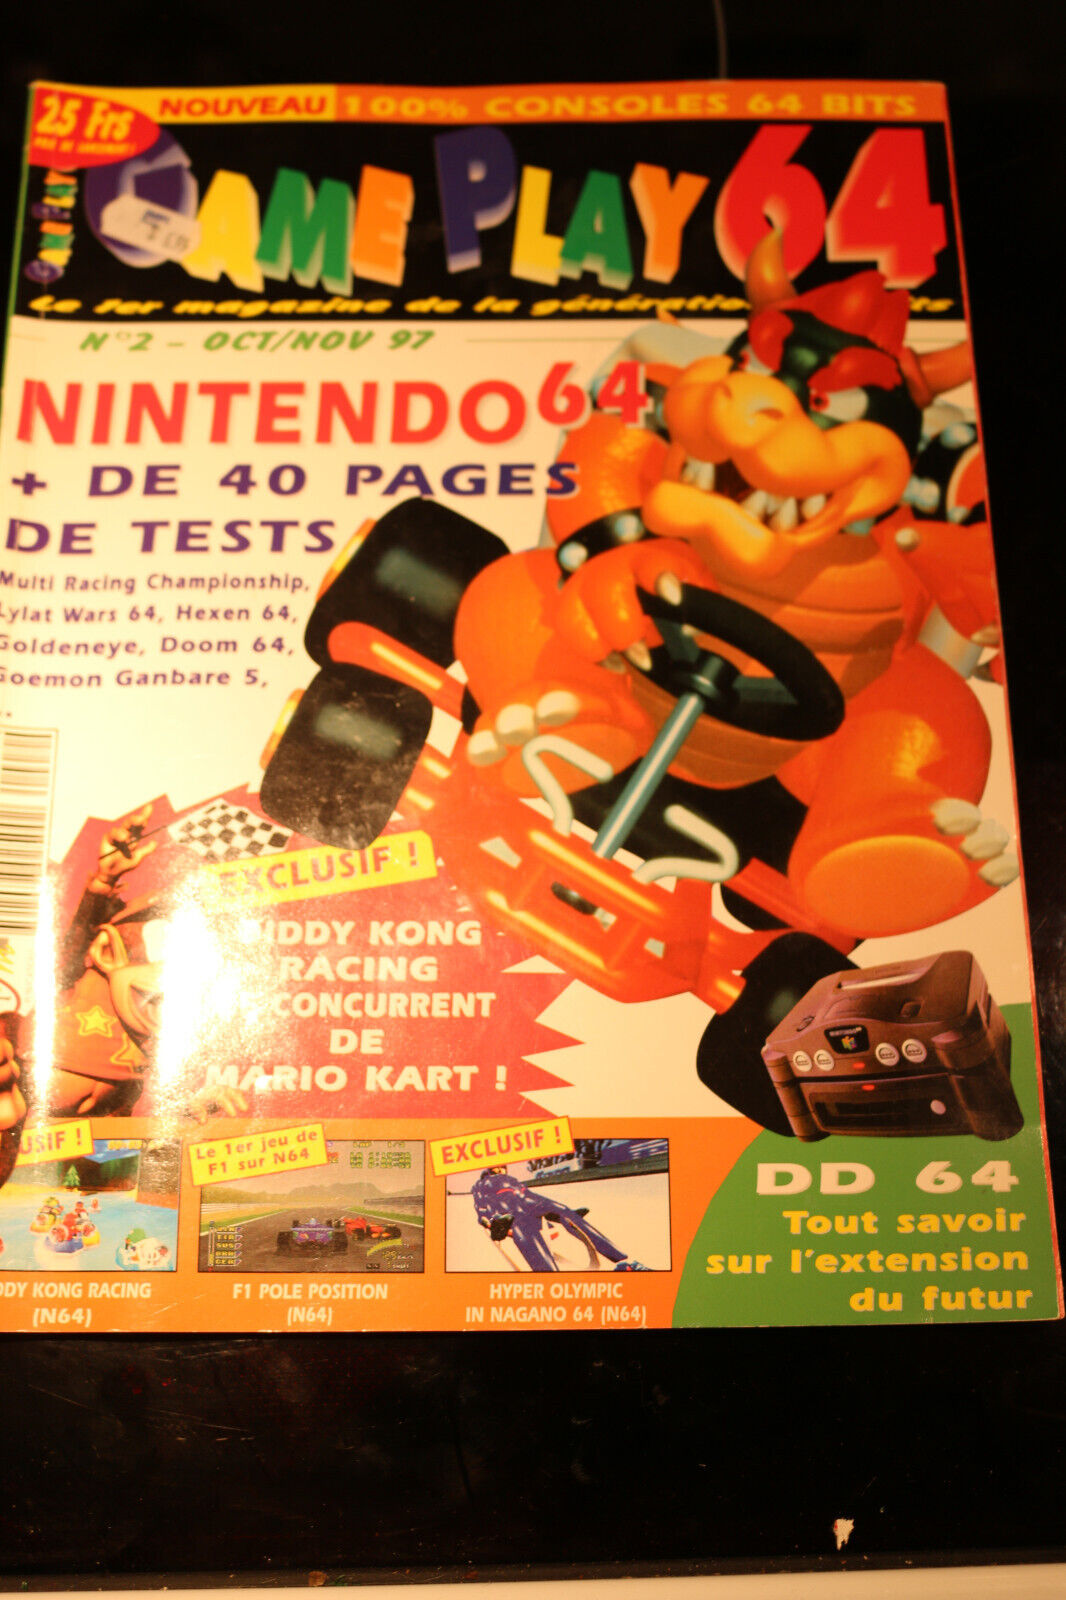 Magazine Nintendo 64 Game Play 64 Jeux Video Consoles Game Boy Mario Kart #2